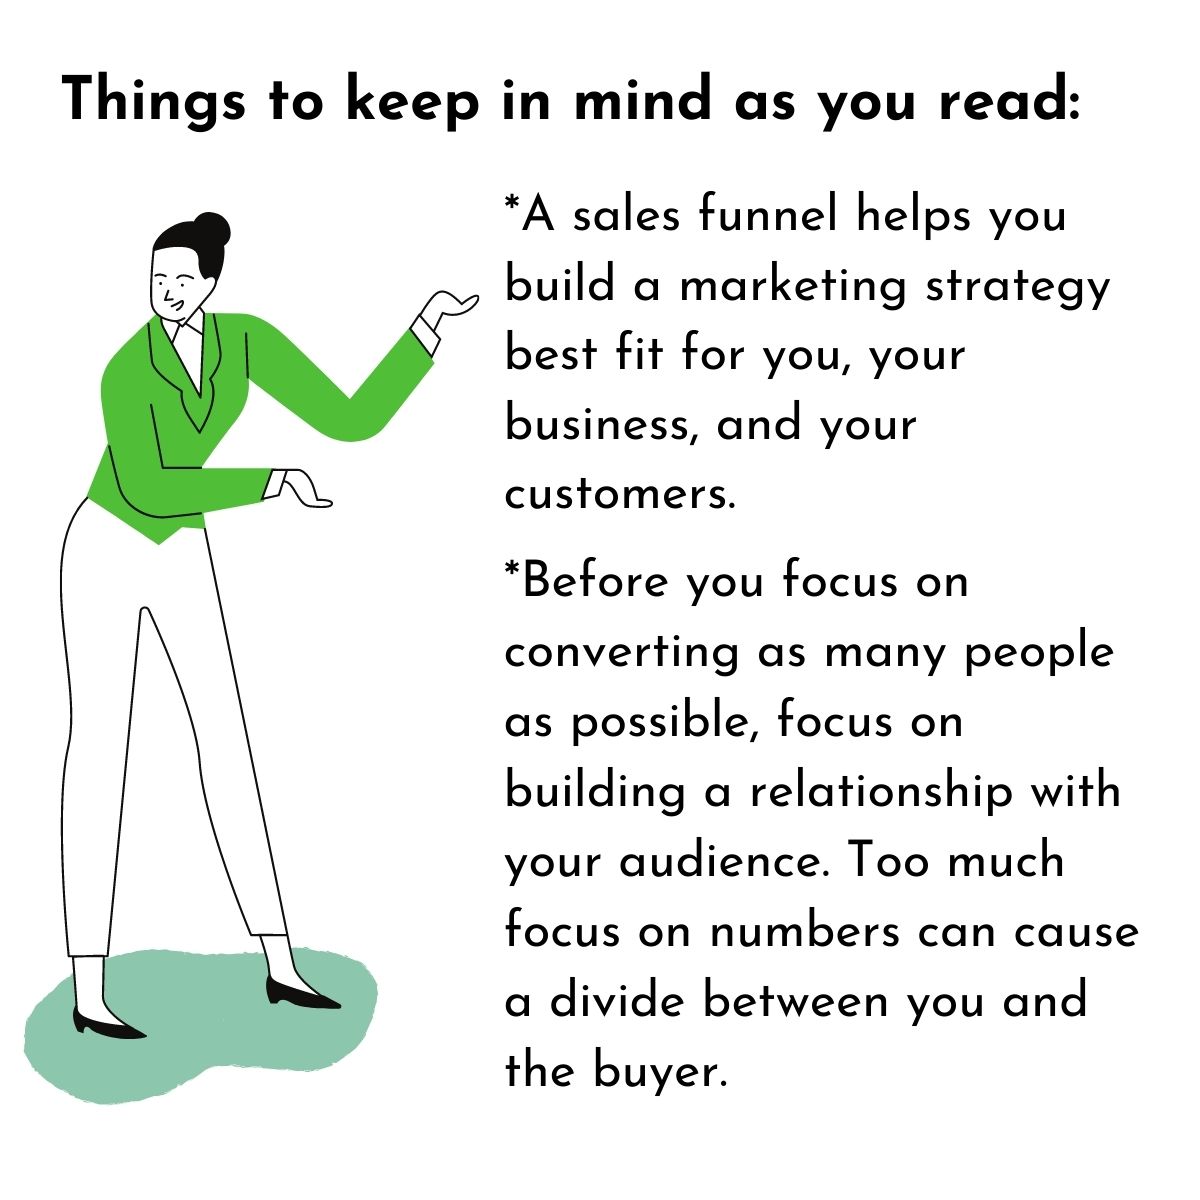 sales funnel tips